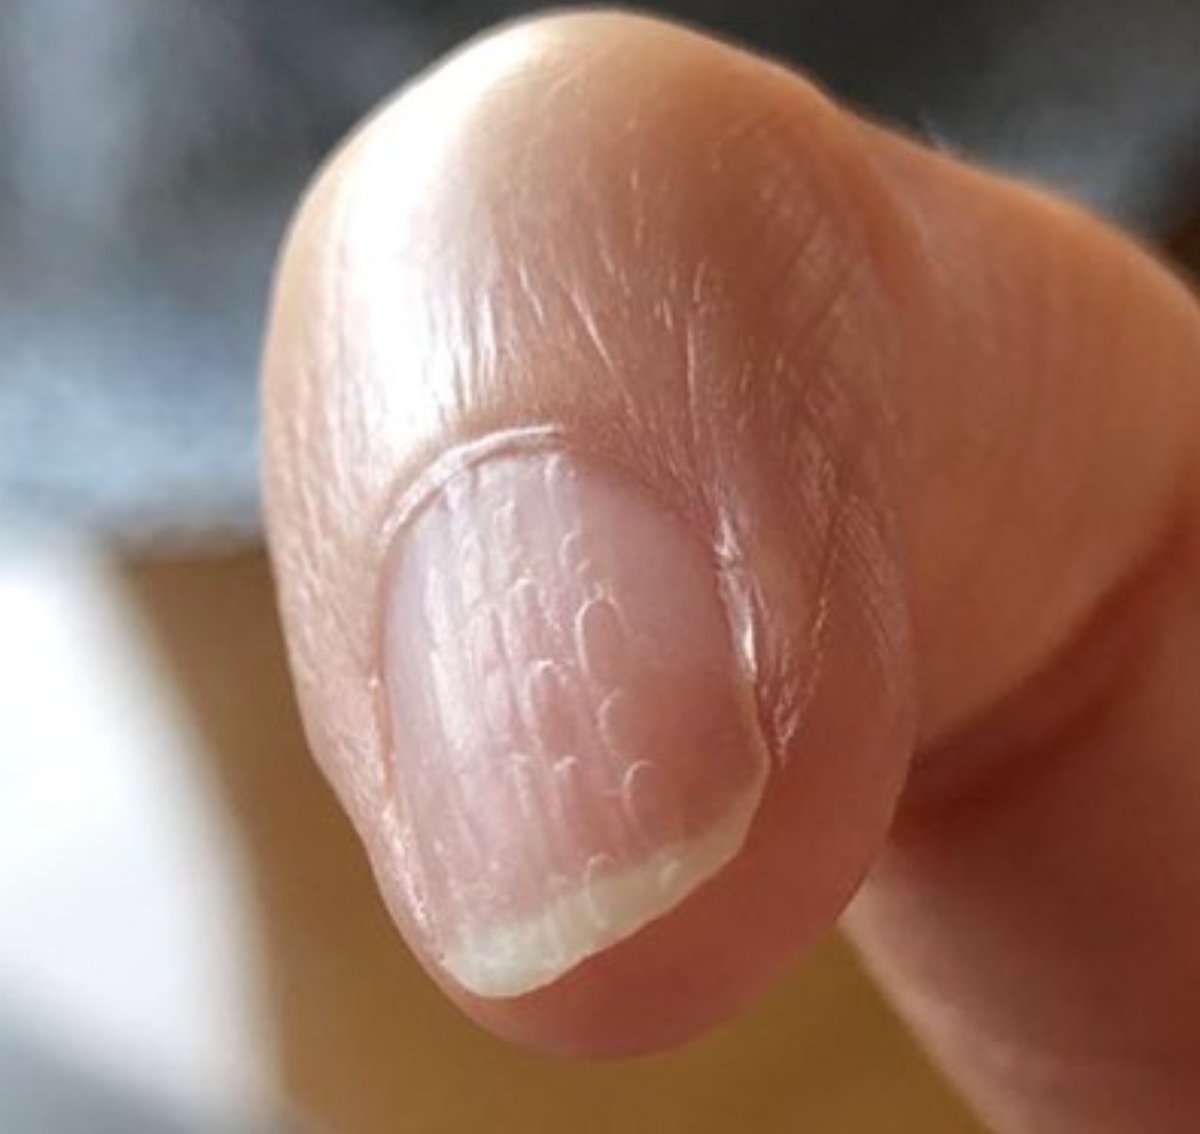 Cmk2wlさんのツイート 11年の福島原発事故後 こういったウロコ状の爪になった方は